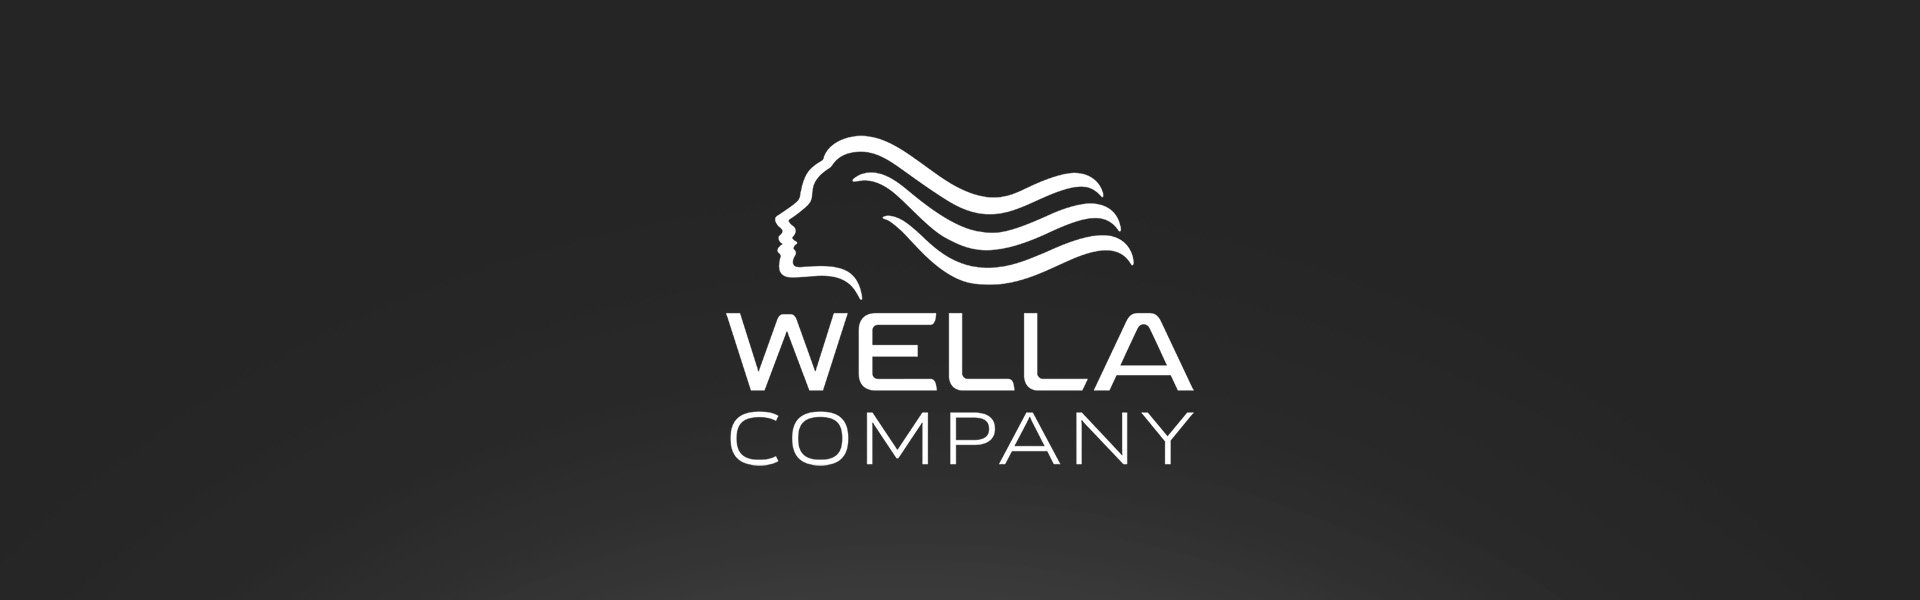 Plaukų dažai Wella Wellaton 100 g, 3/0 Dark Brown Wella